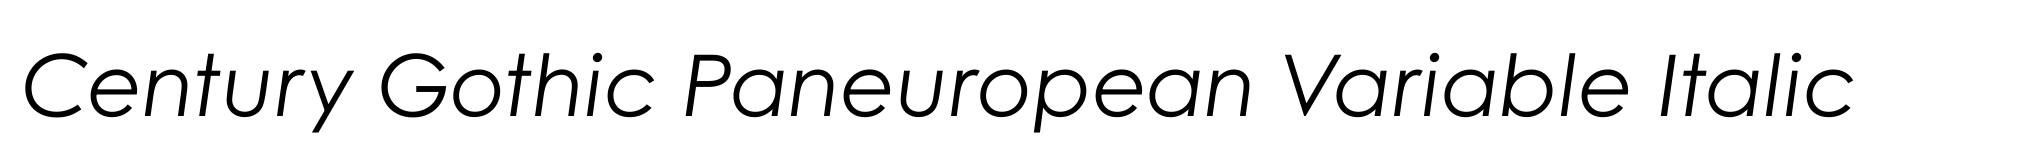 Century Gothic Paneuropean Variable Italic image